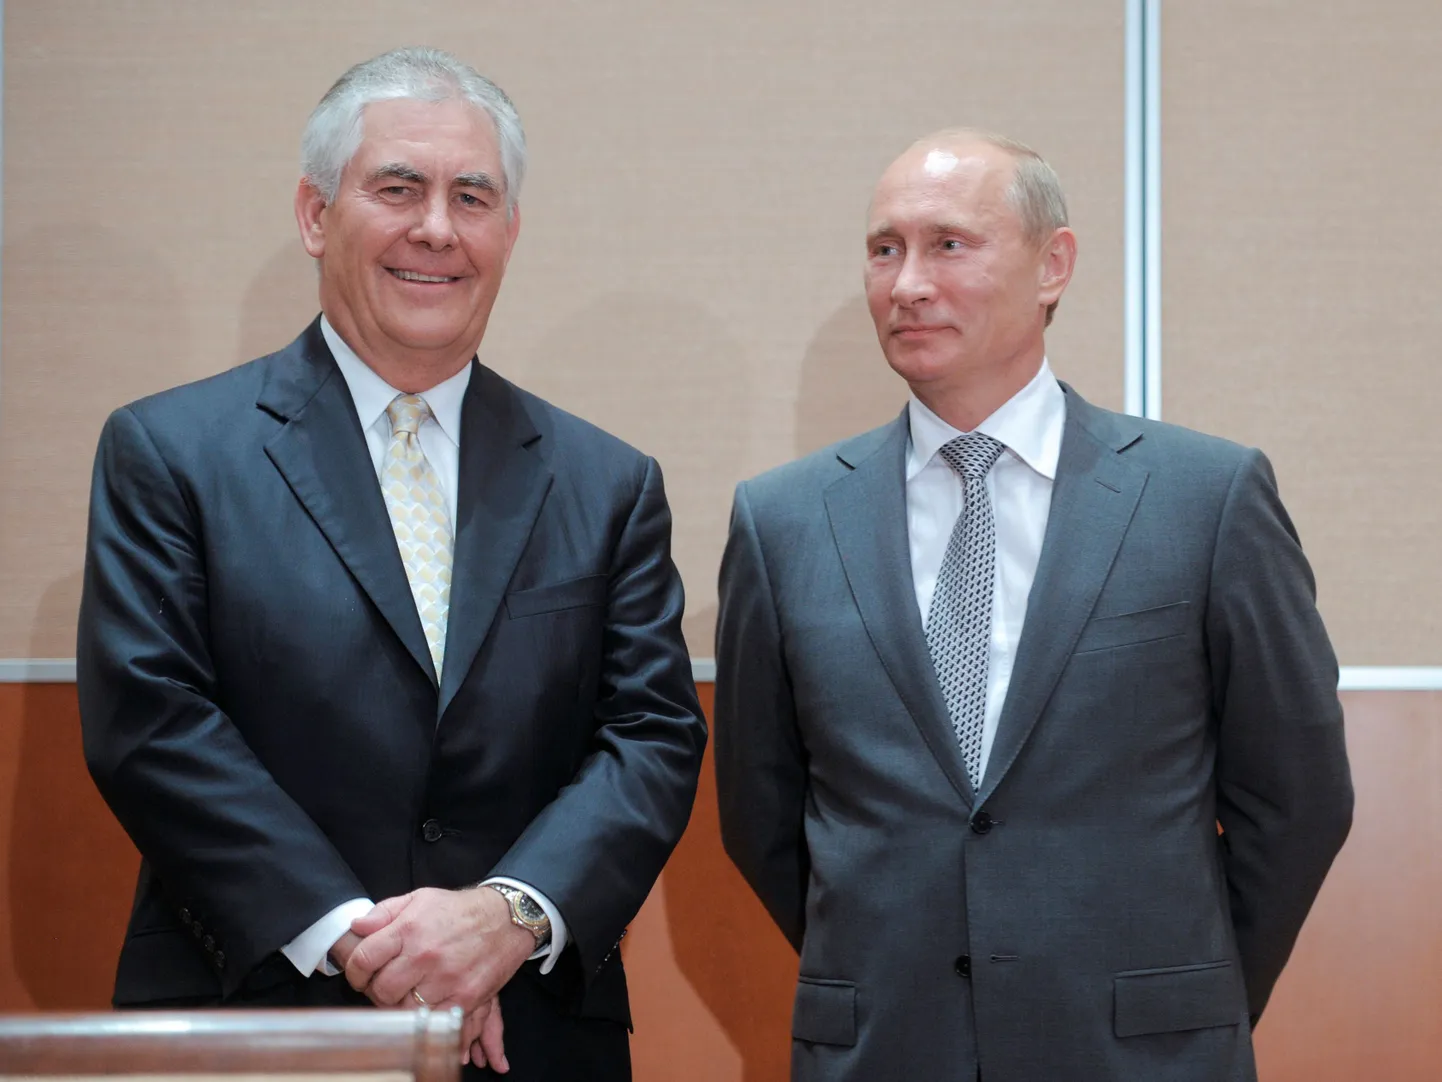 Vene president Vladimir Putin ja USA välisminister Rex Tillerson 2011. aastal.